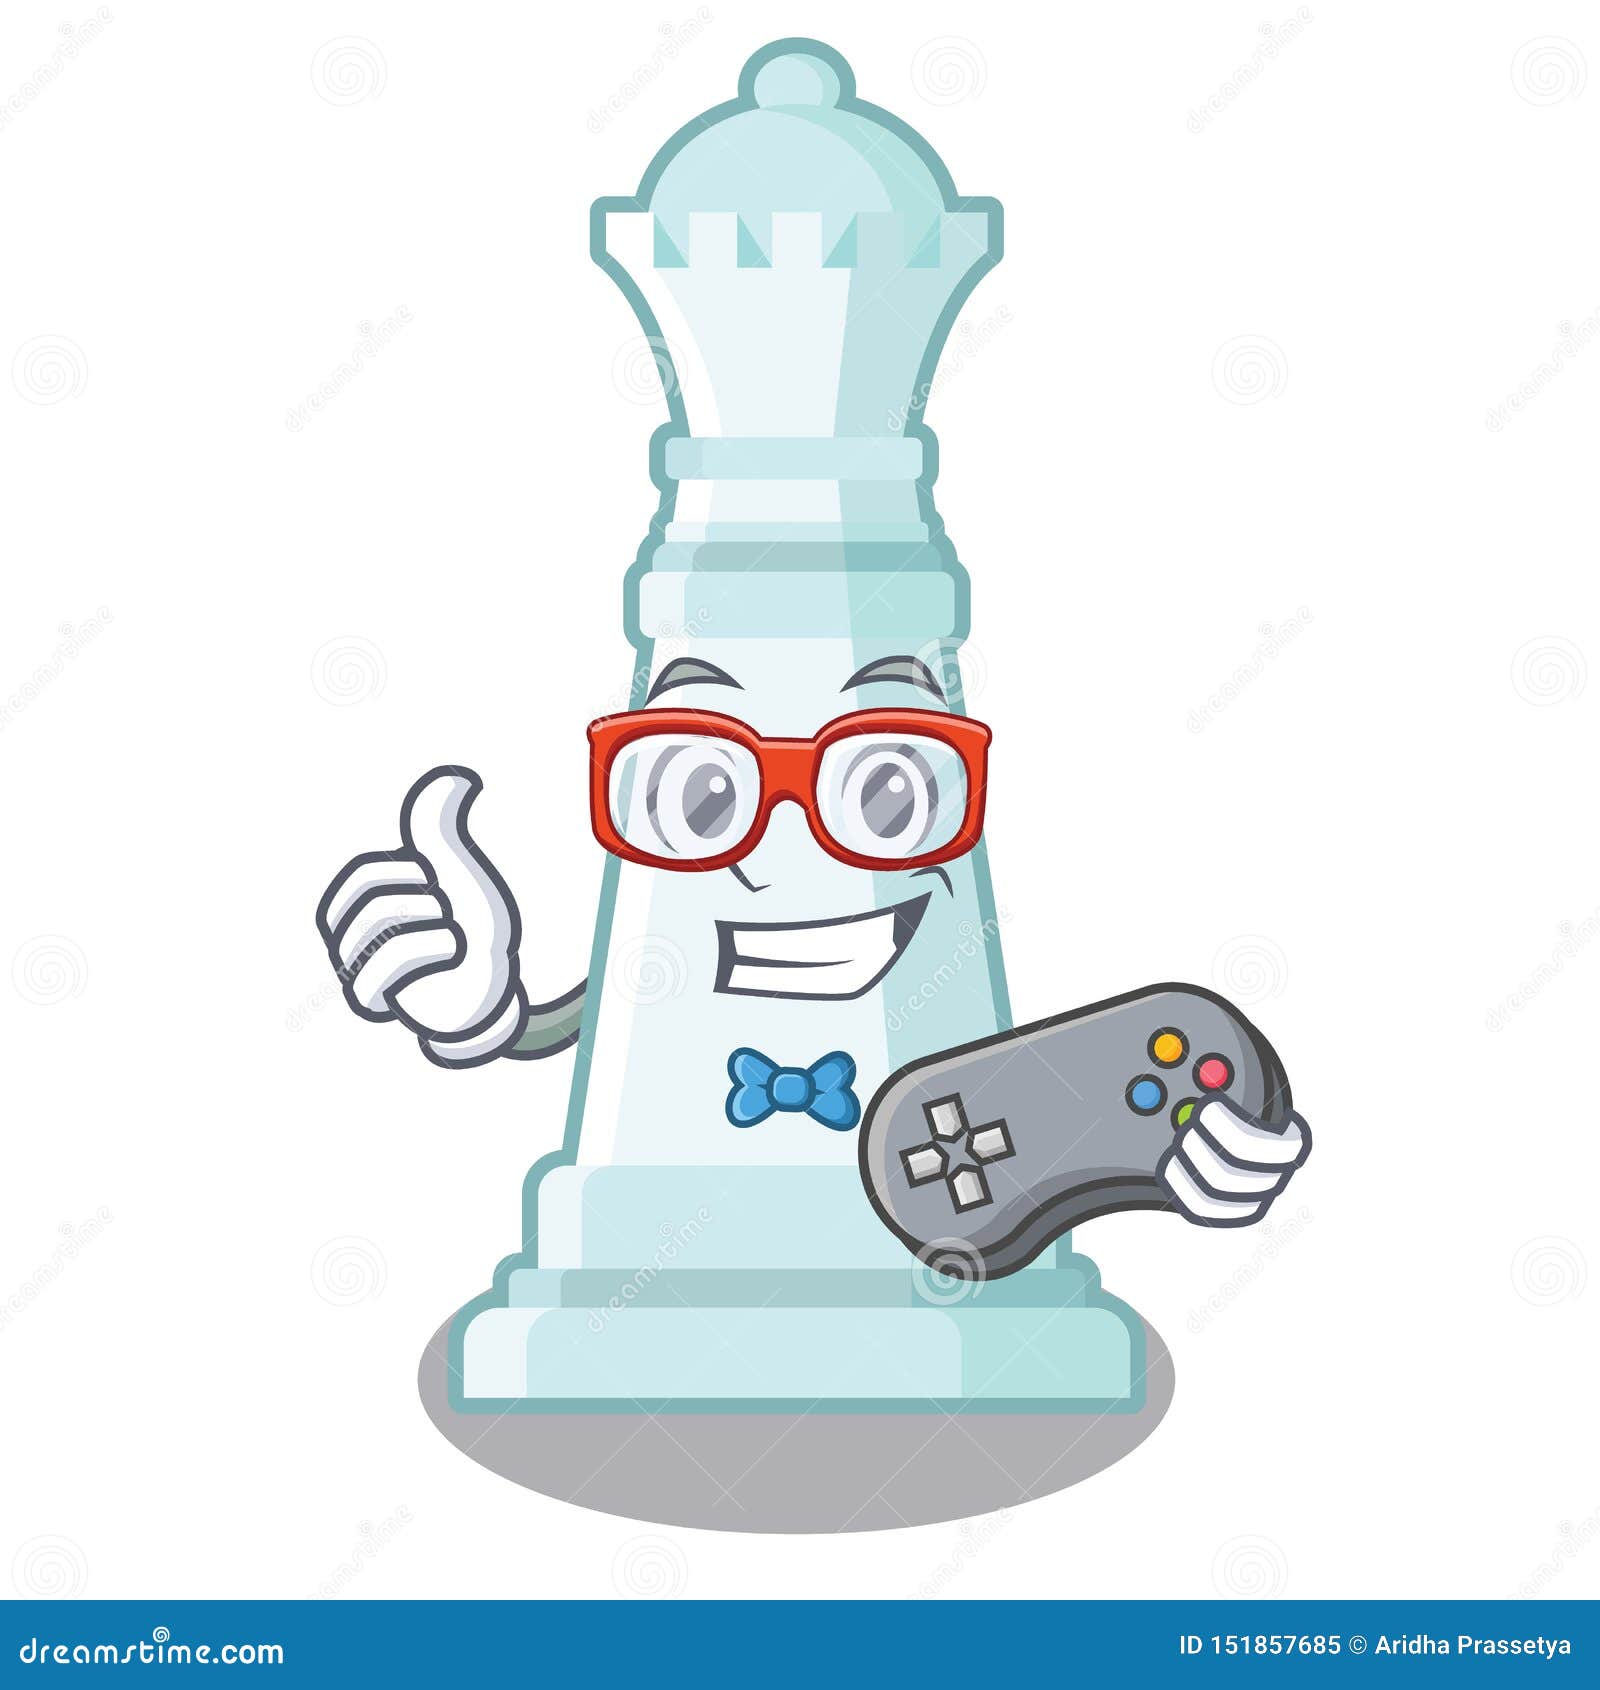 gamer chess queen in the cartoon 